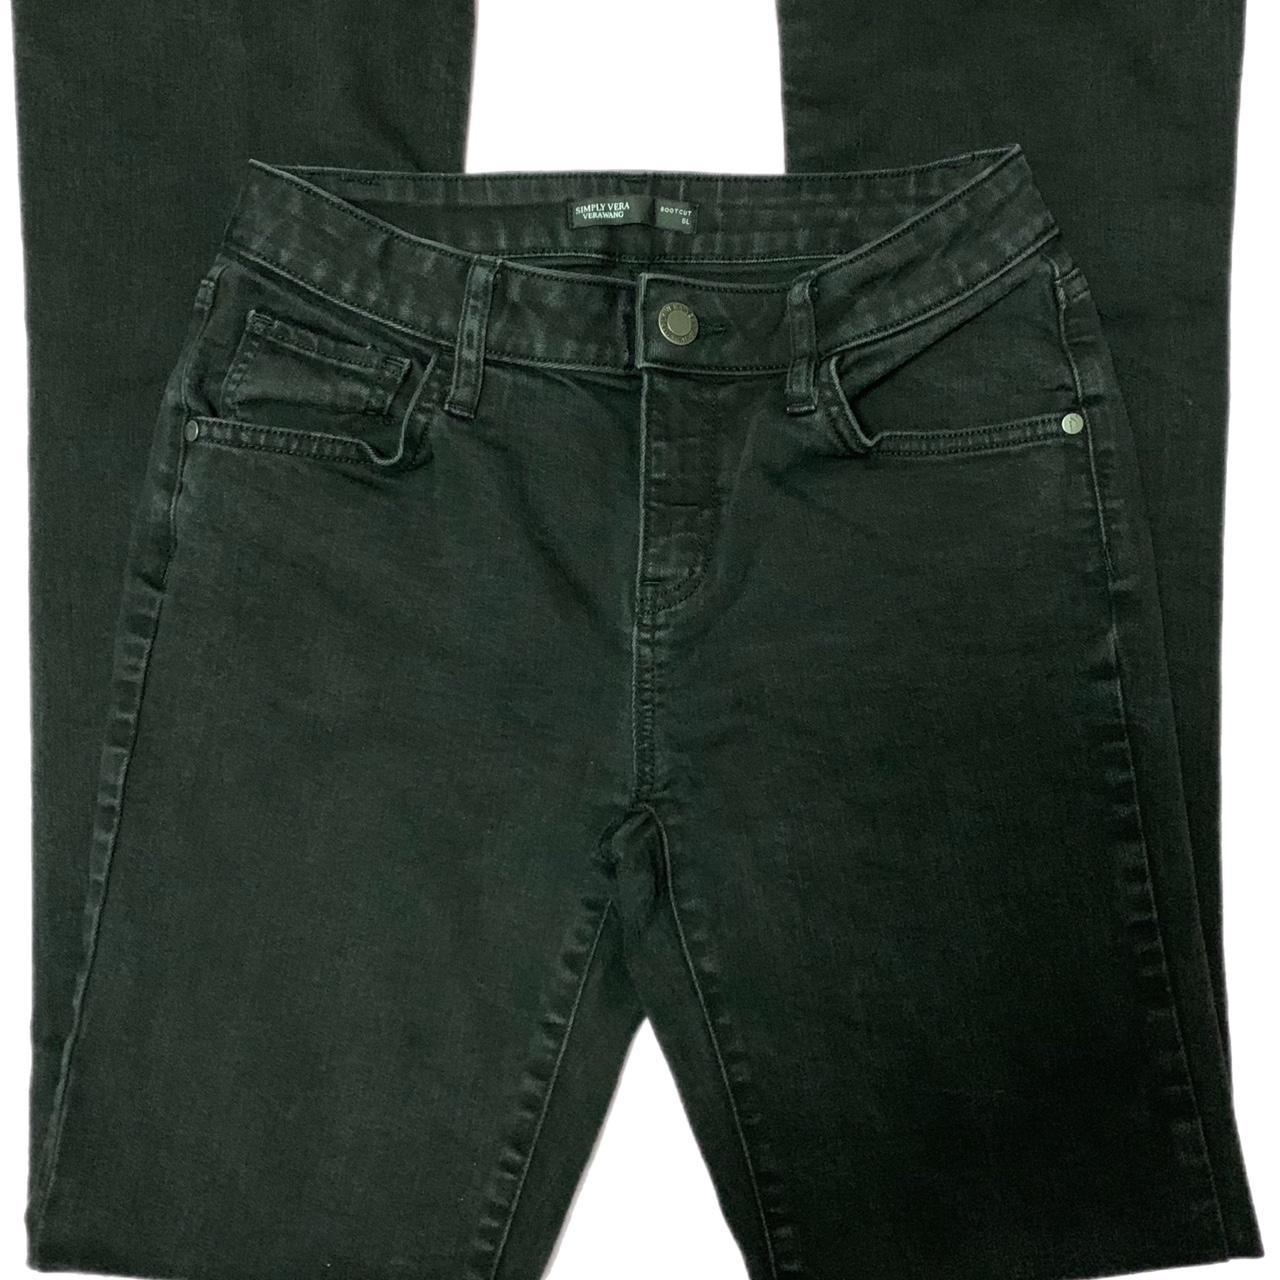 Simply Vera Vera Wang Pants Size XXL 39x23 Modern - Depop